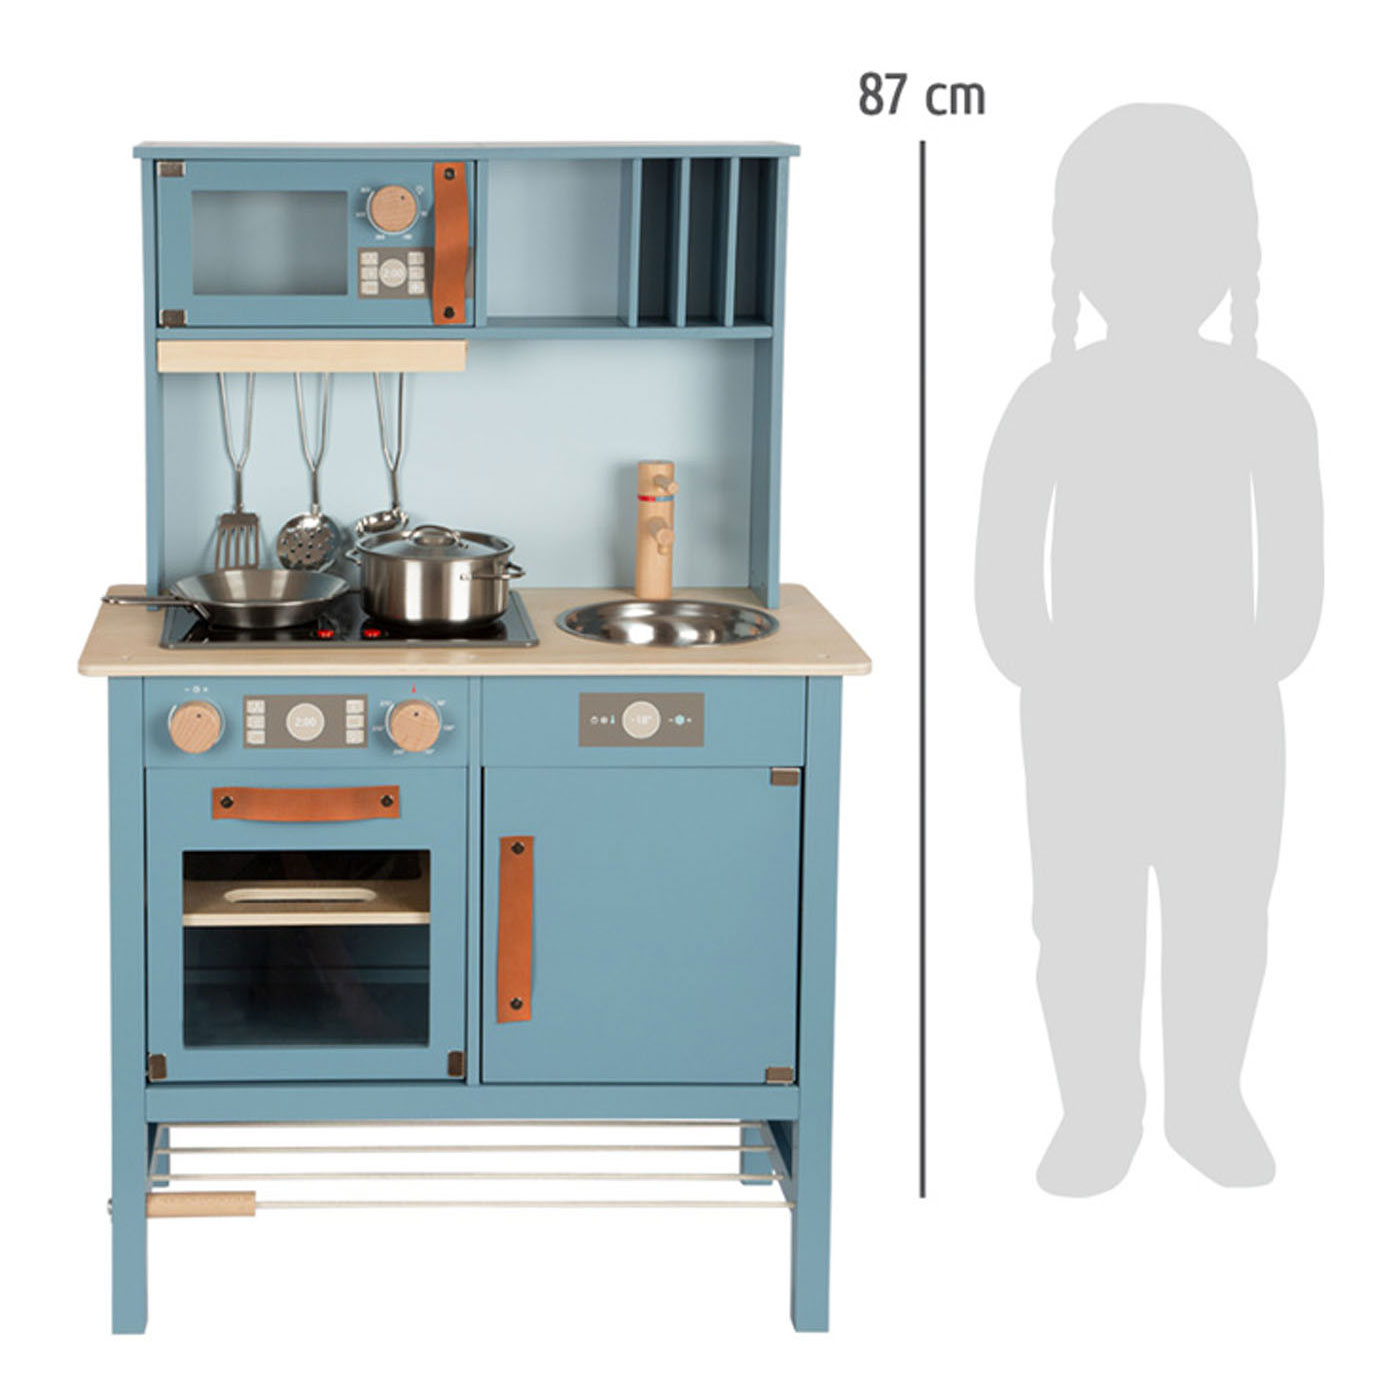 Small Foot - Kinderküche aus Holz Blau, 7dlg.